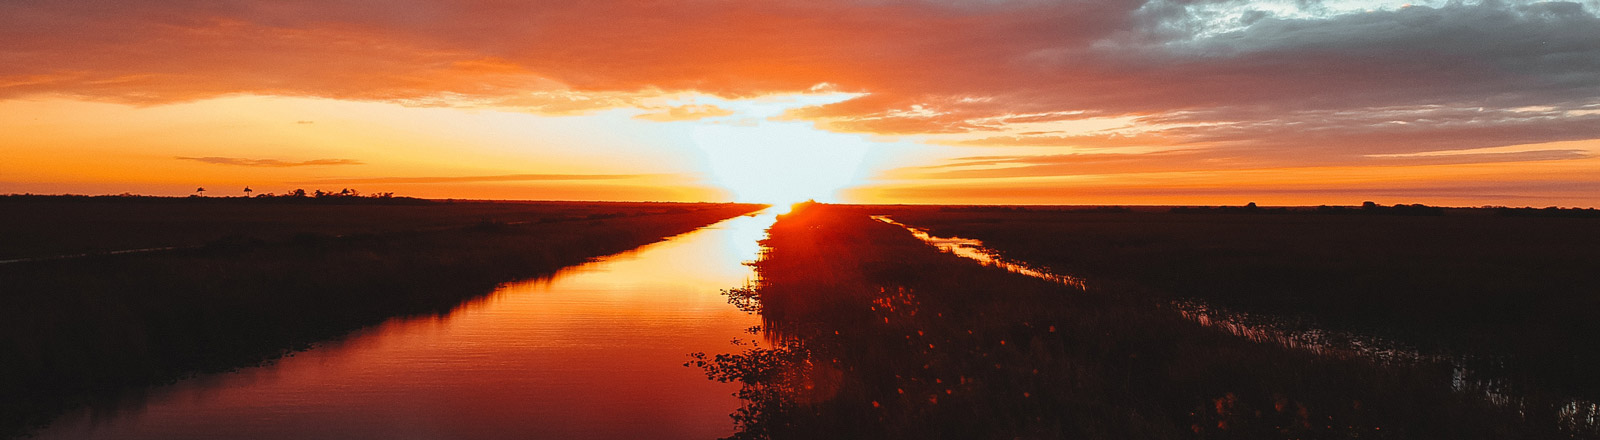 image of orange sunset overlooking wide shot of waterway in the everglades